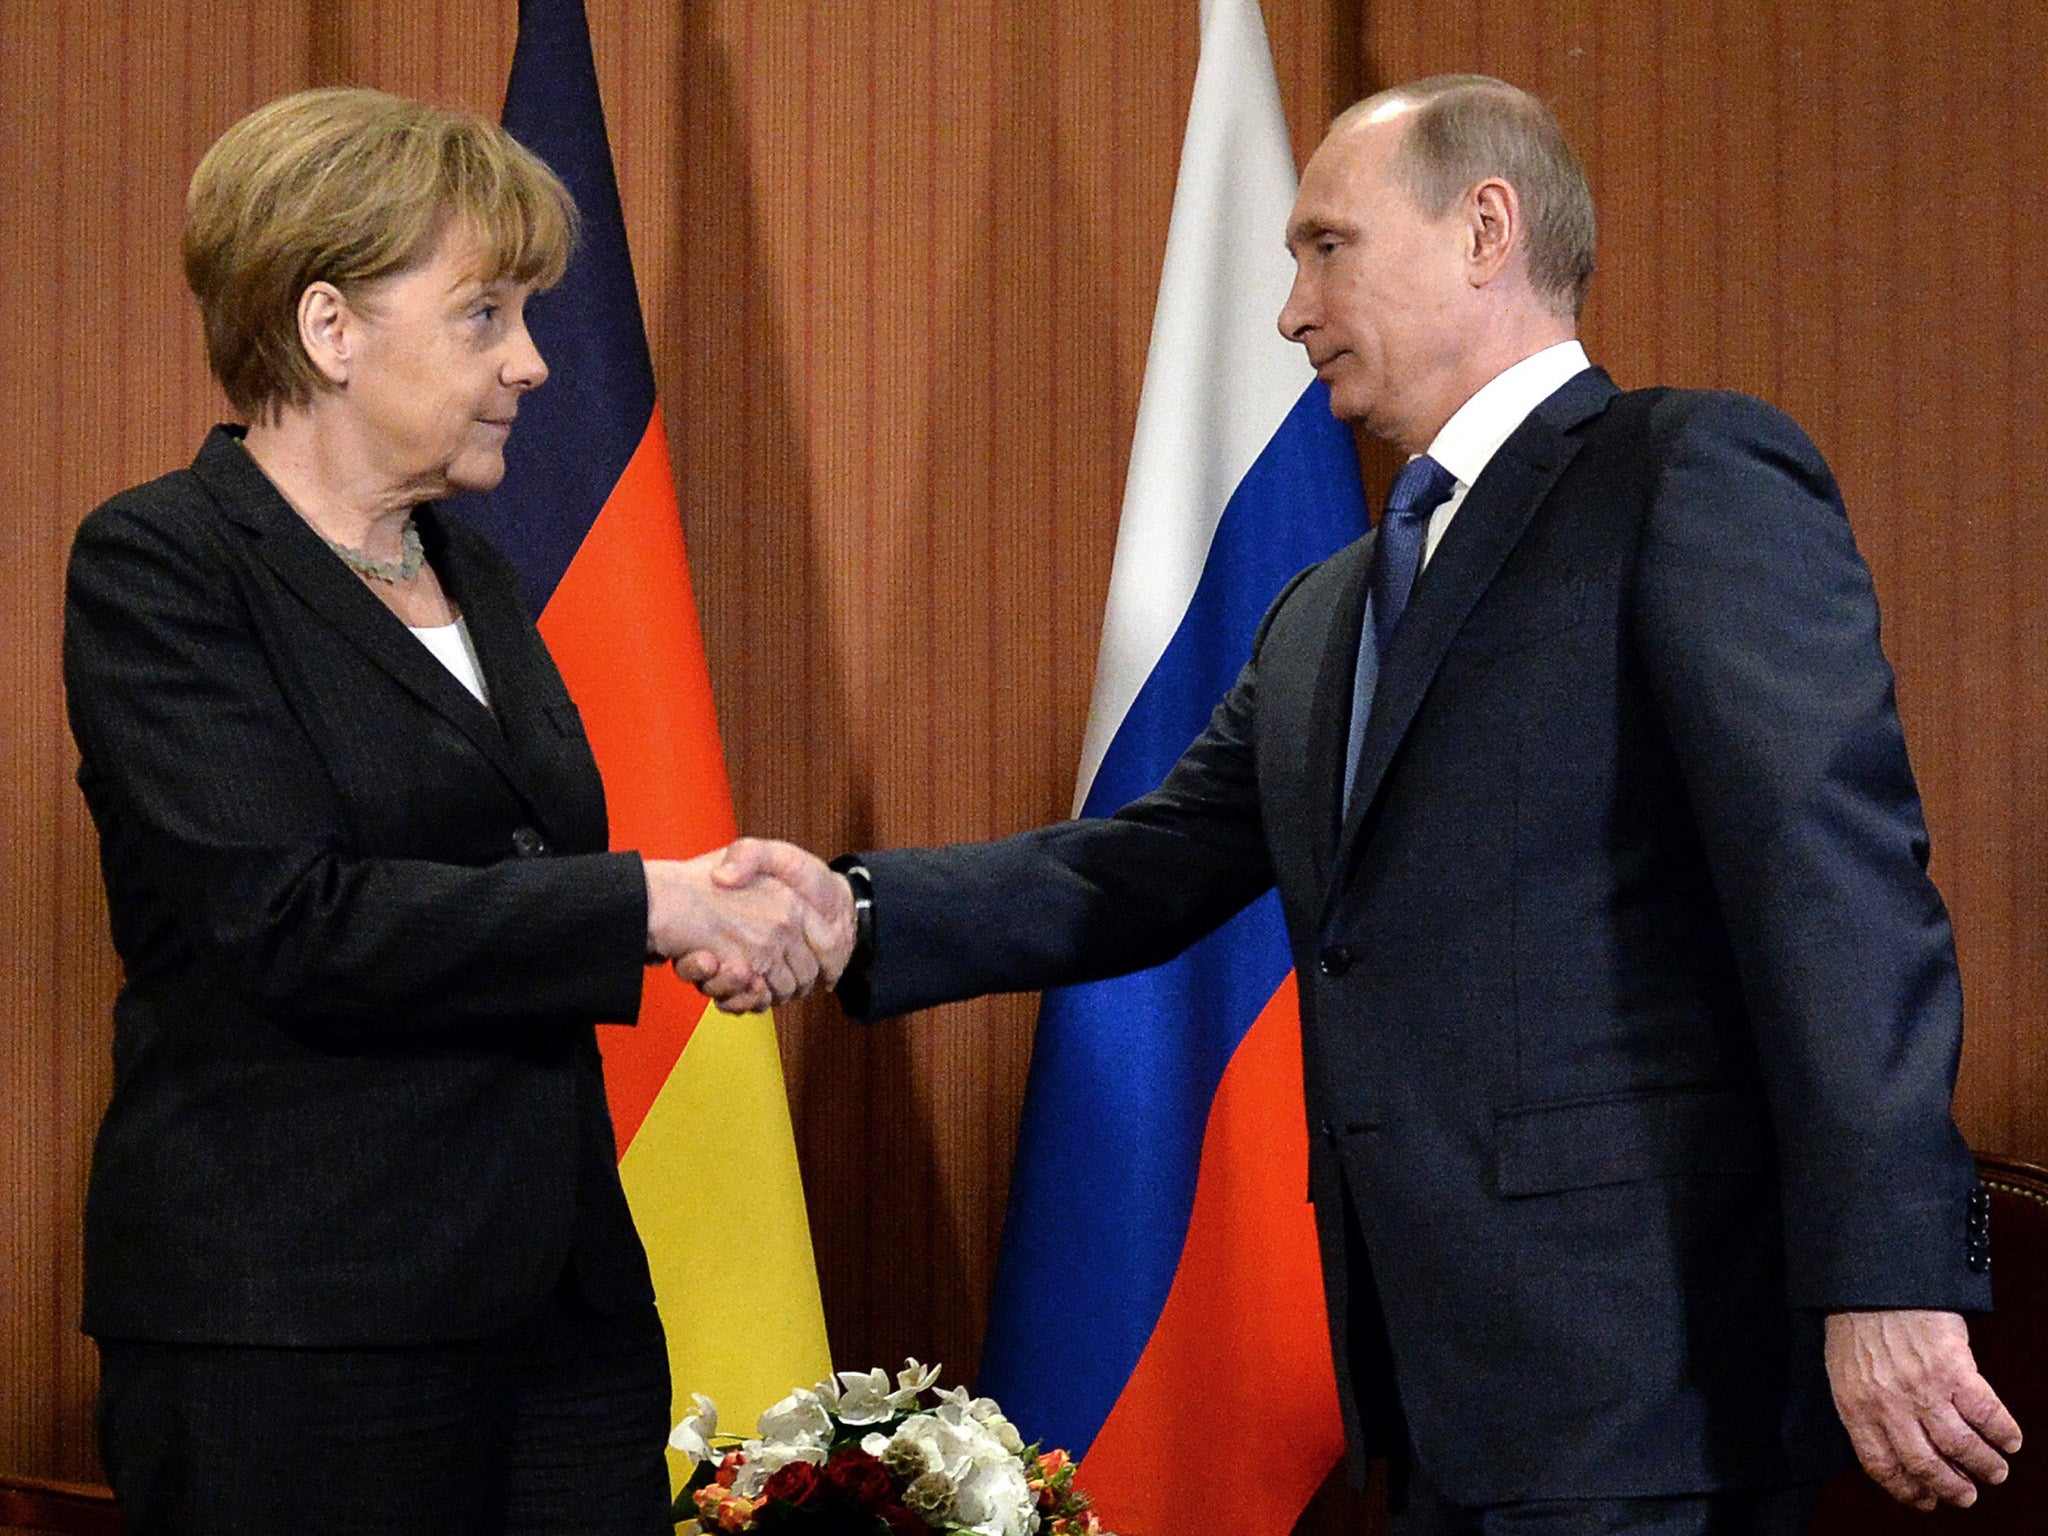 Russian President Vladimir Putin shakes hand with German chancellor Angela Merkel, during a meeting last month